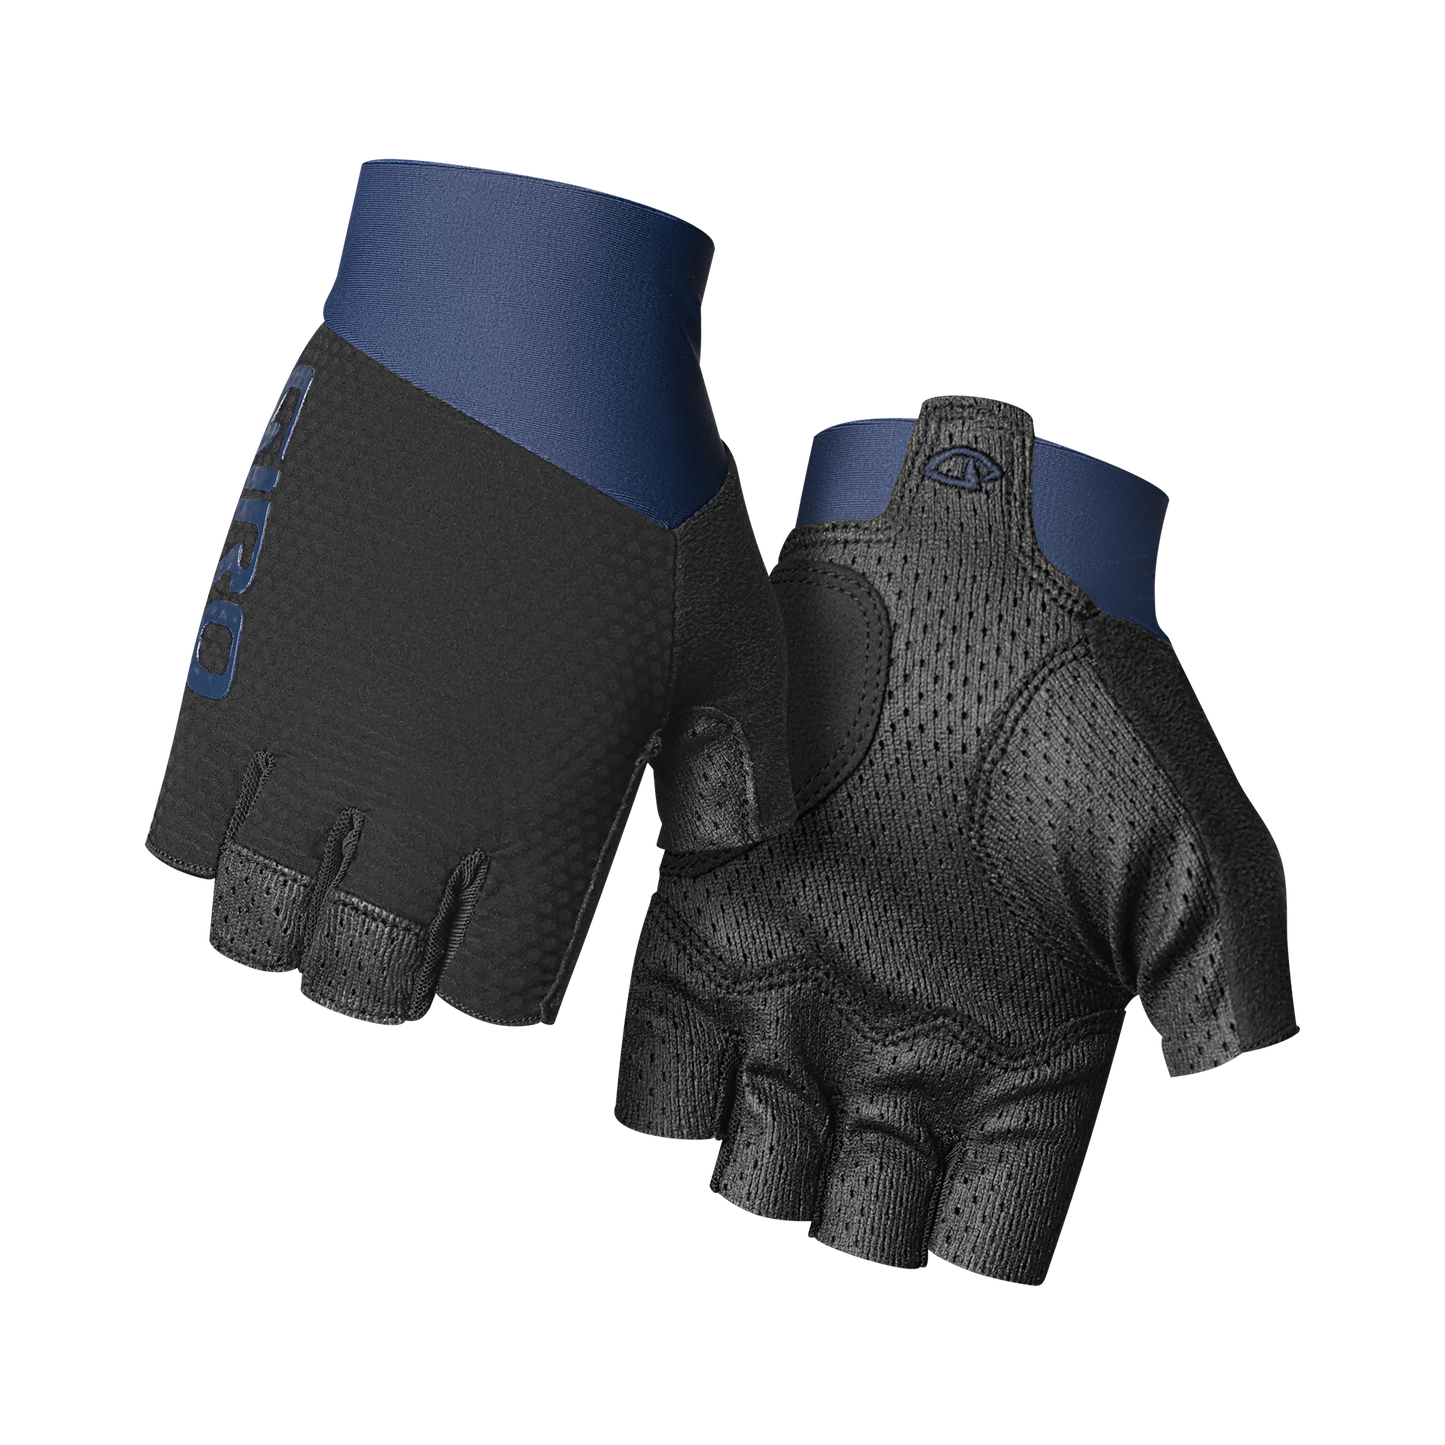 GIRO ZERO CS short finger gloves/ GIRO ZERO CS GLOVES